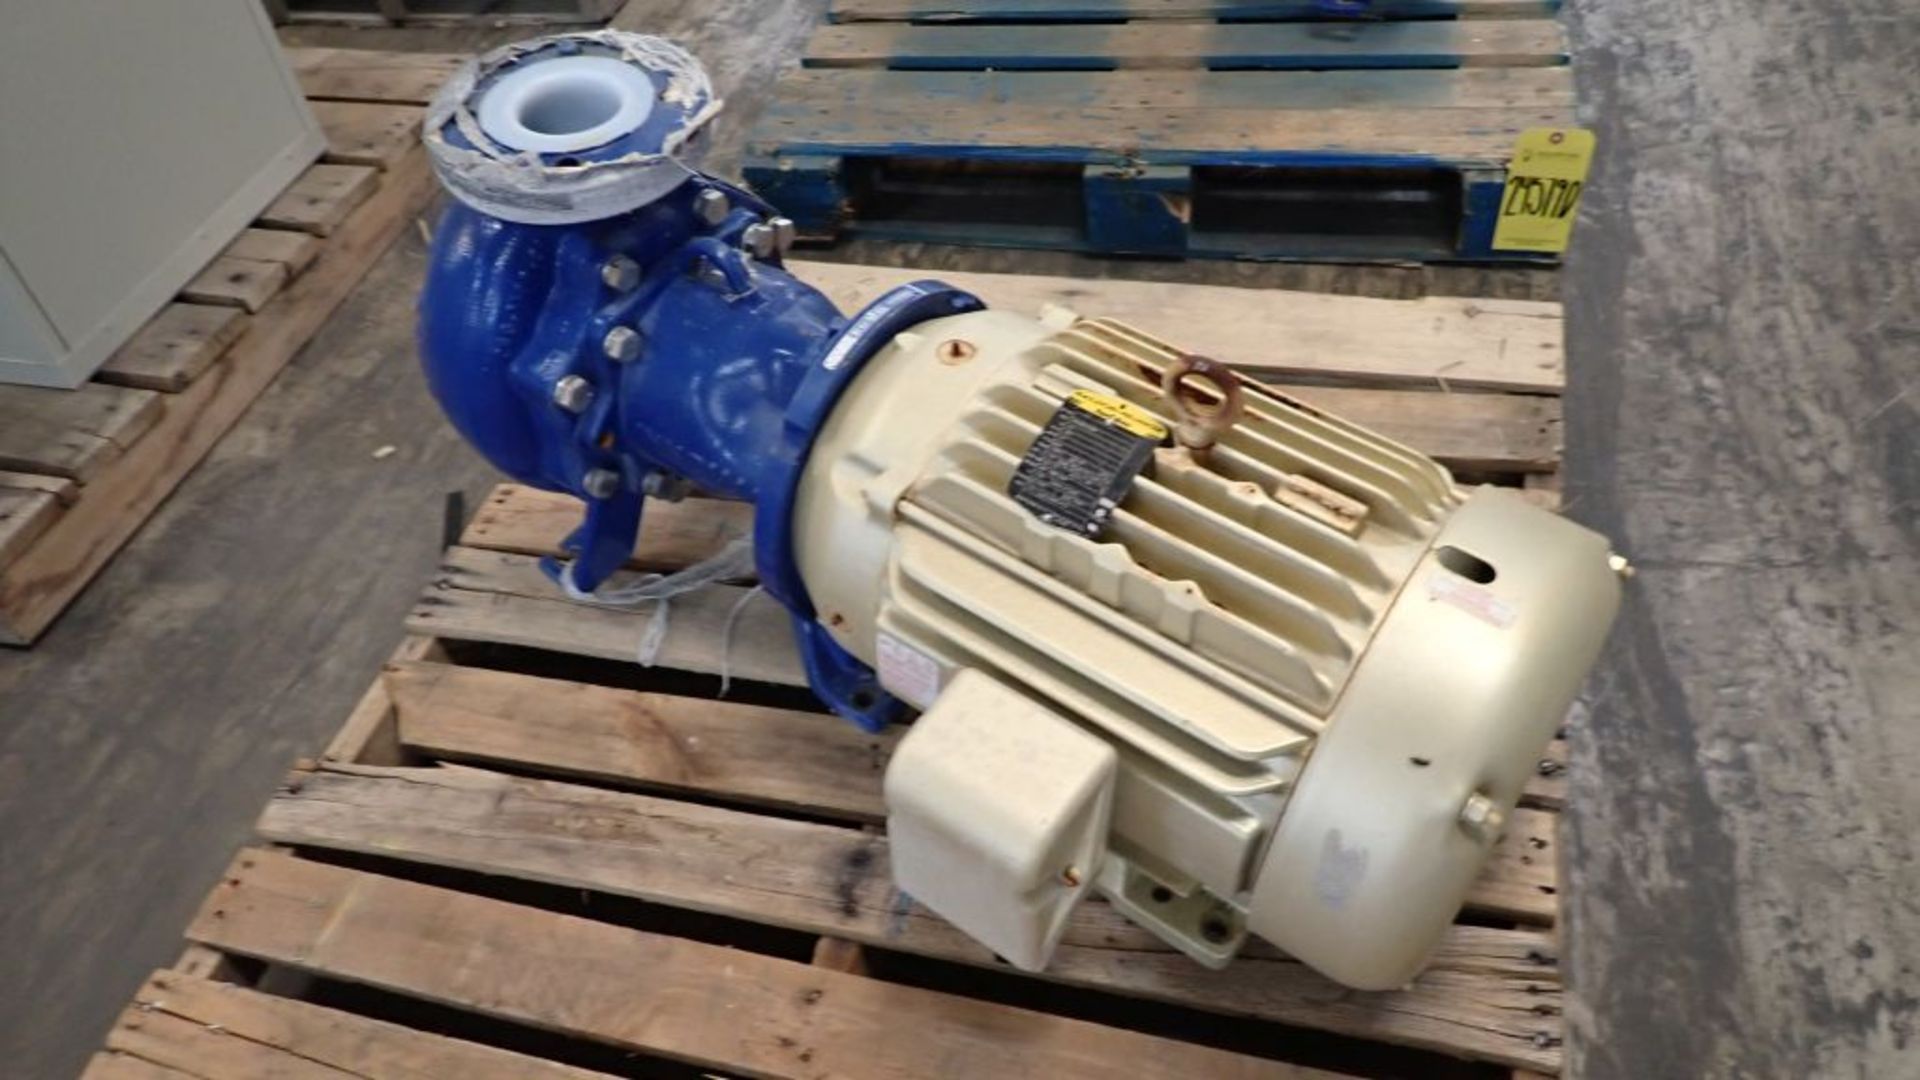 Flowserve Imnomag Sealless Pump w/Baldor 20 HP Motor | Pump Part No. B665011100-BF0, Imp. Dia/Max